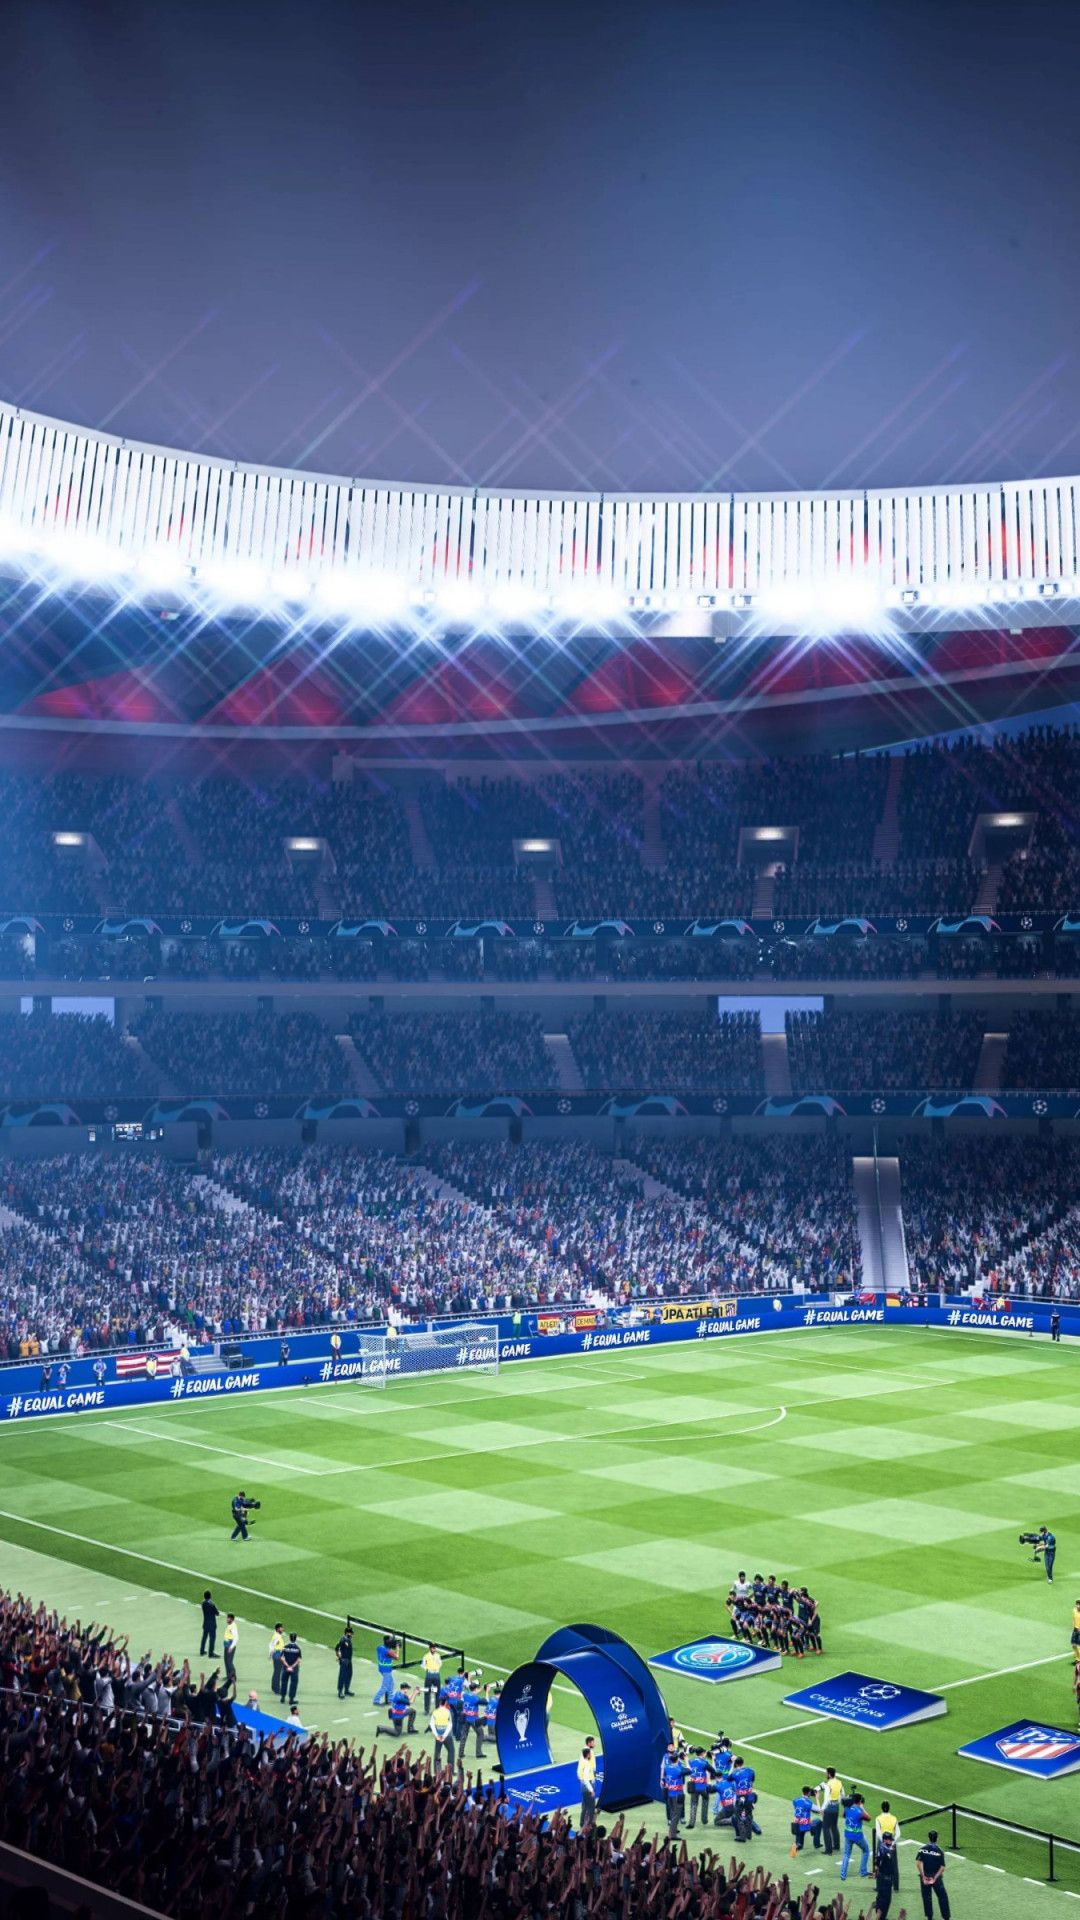 Download wallpaper: Fifa 19 stadium 1080x1920